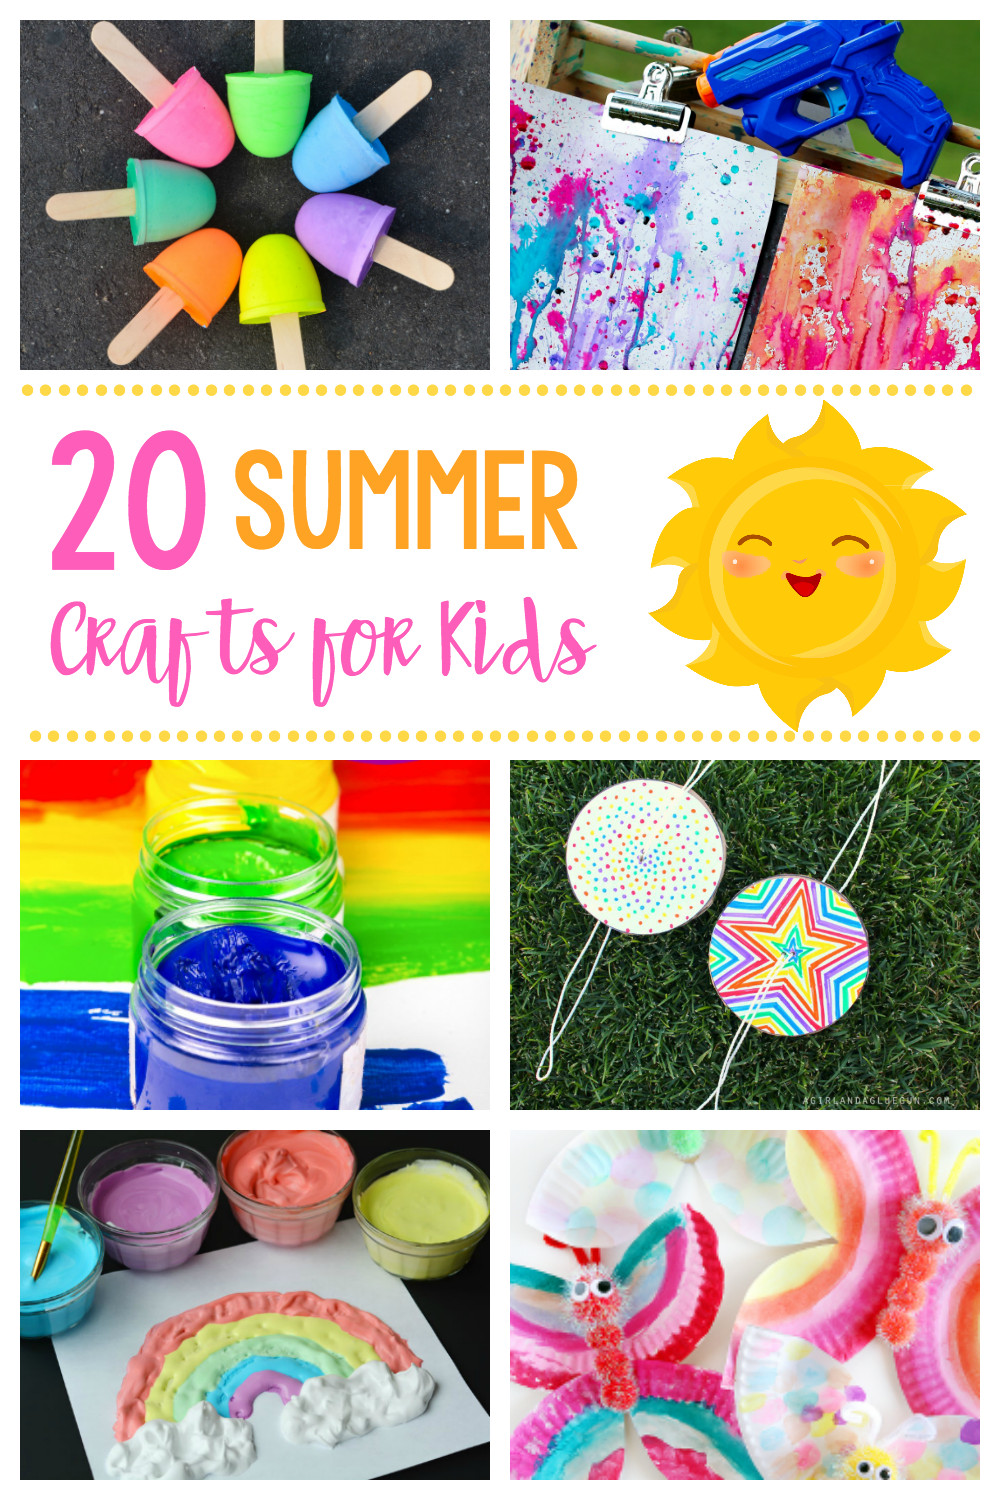 Best ideas about Summer Crafts Ideas For Kids
. Save or Pin 20 Simple & Fun Summer Crafts for Kids Now.